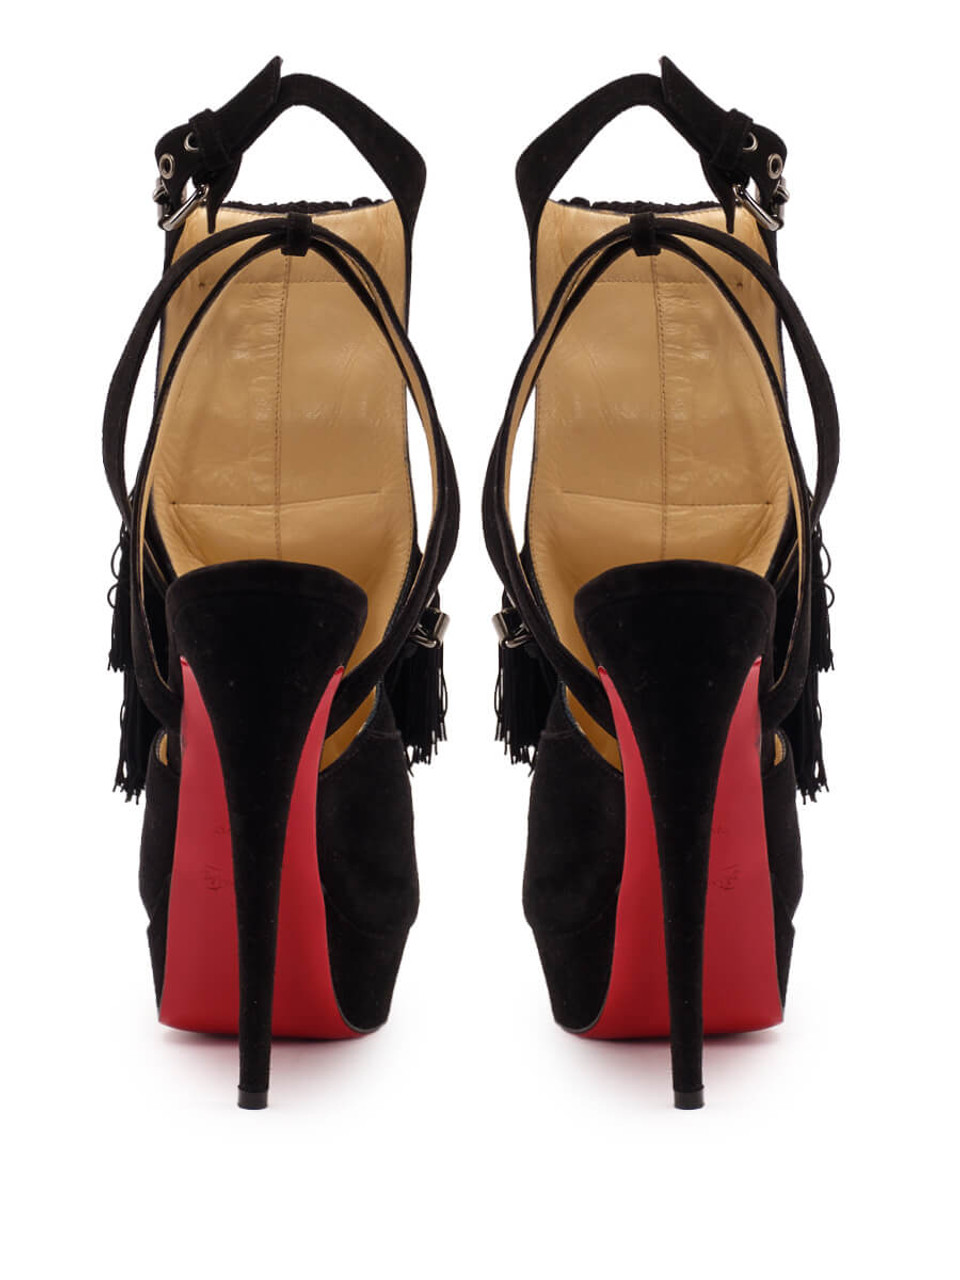 Women Christian Louboutin Fringe Peep-Toe Platform Heels -  Black Size 38.5 US 8.5